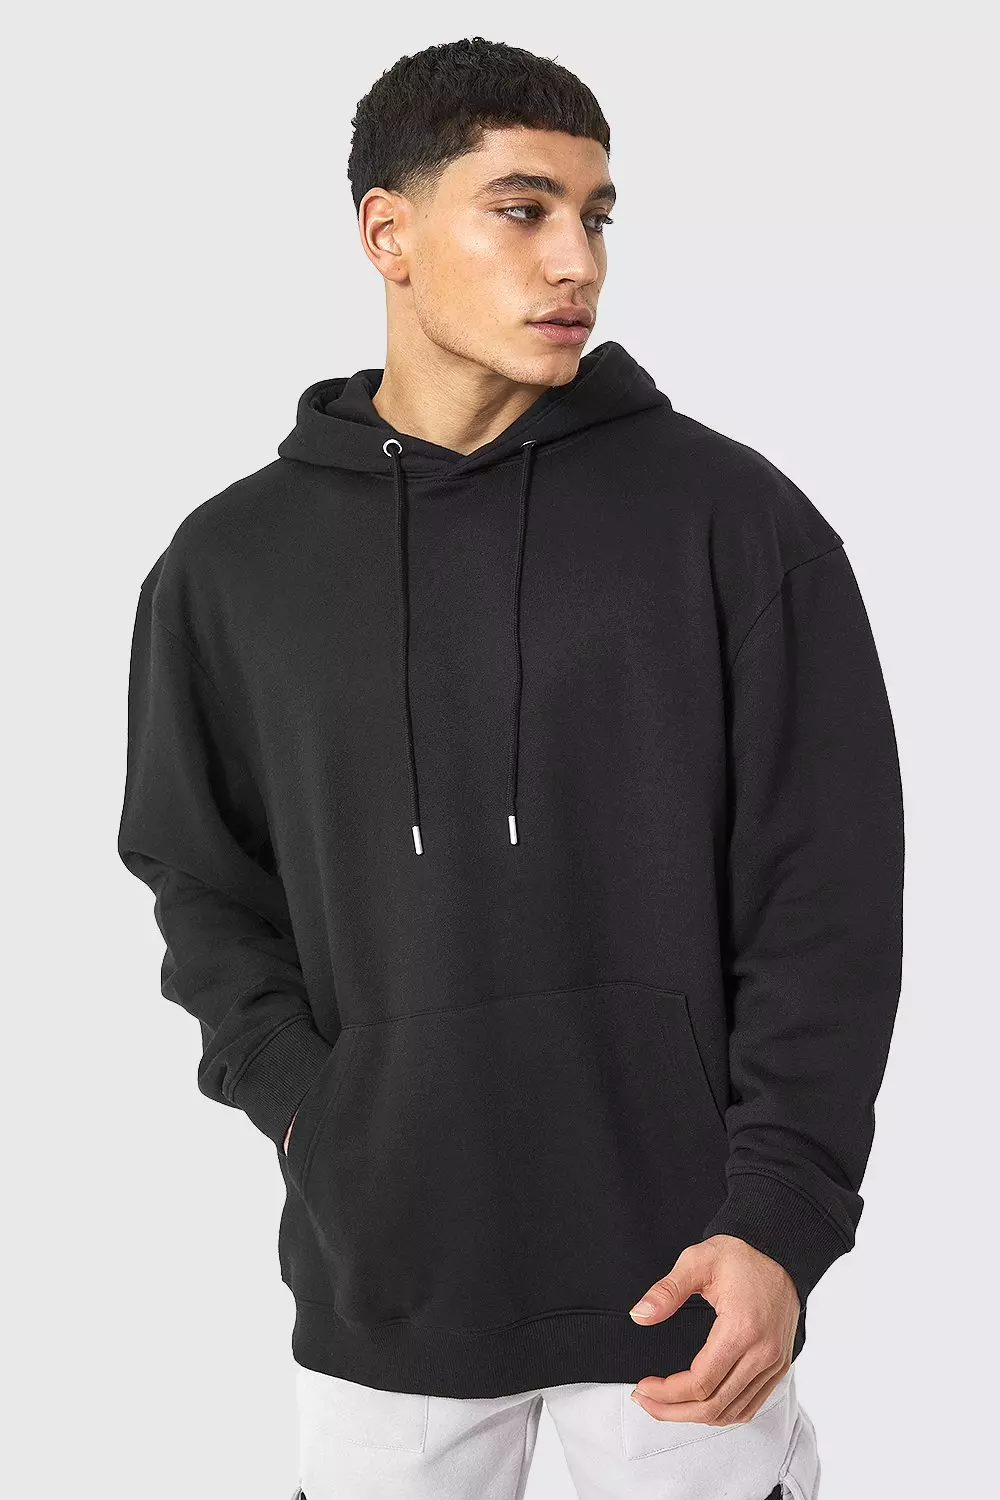 Black oversized hoodies